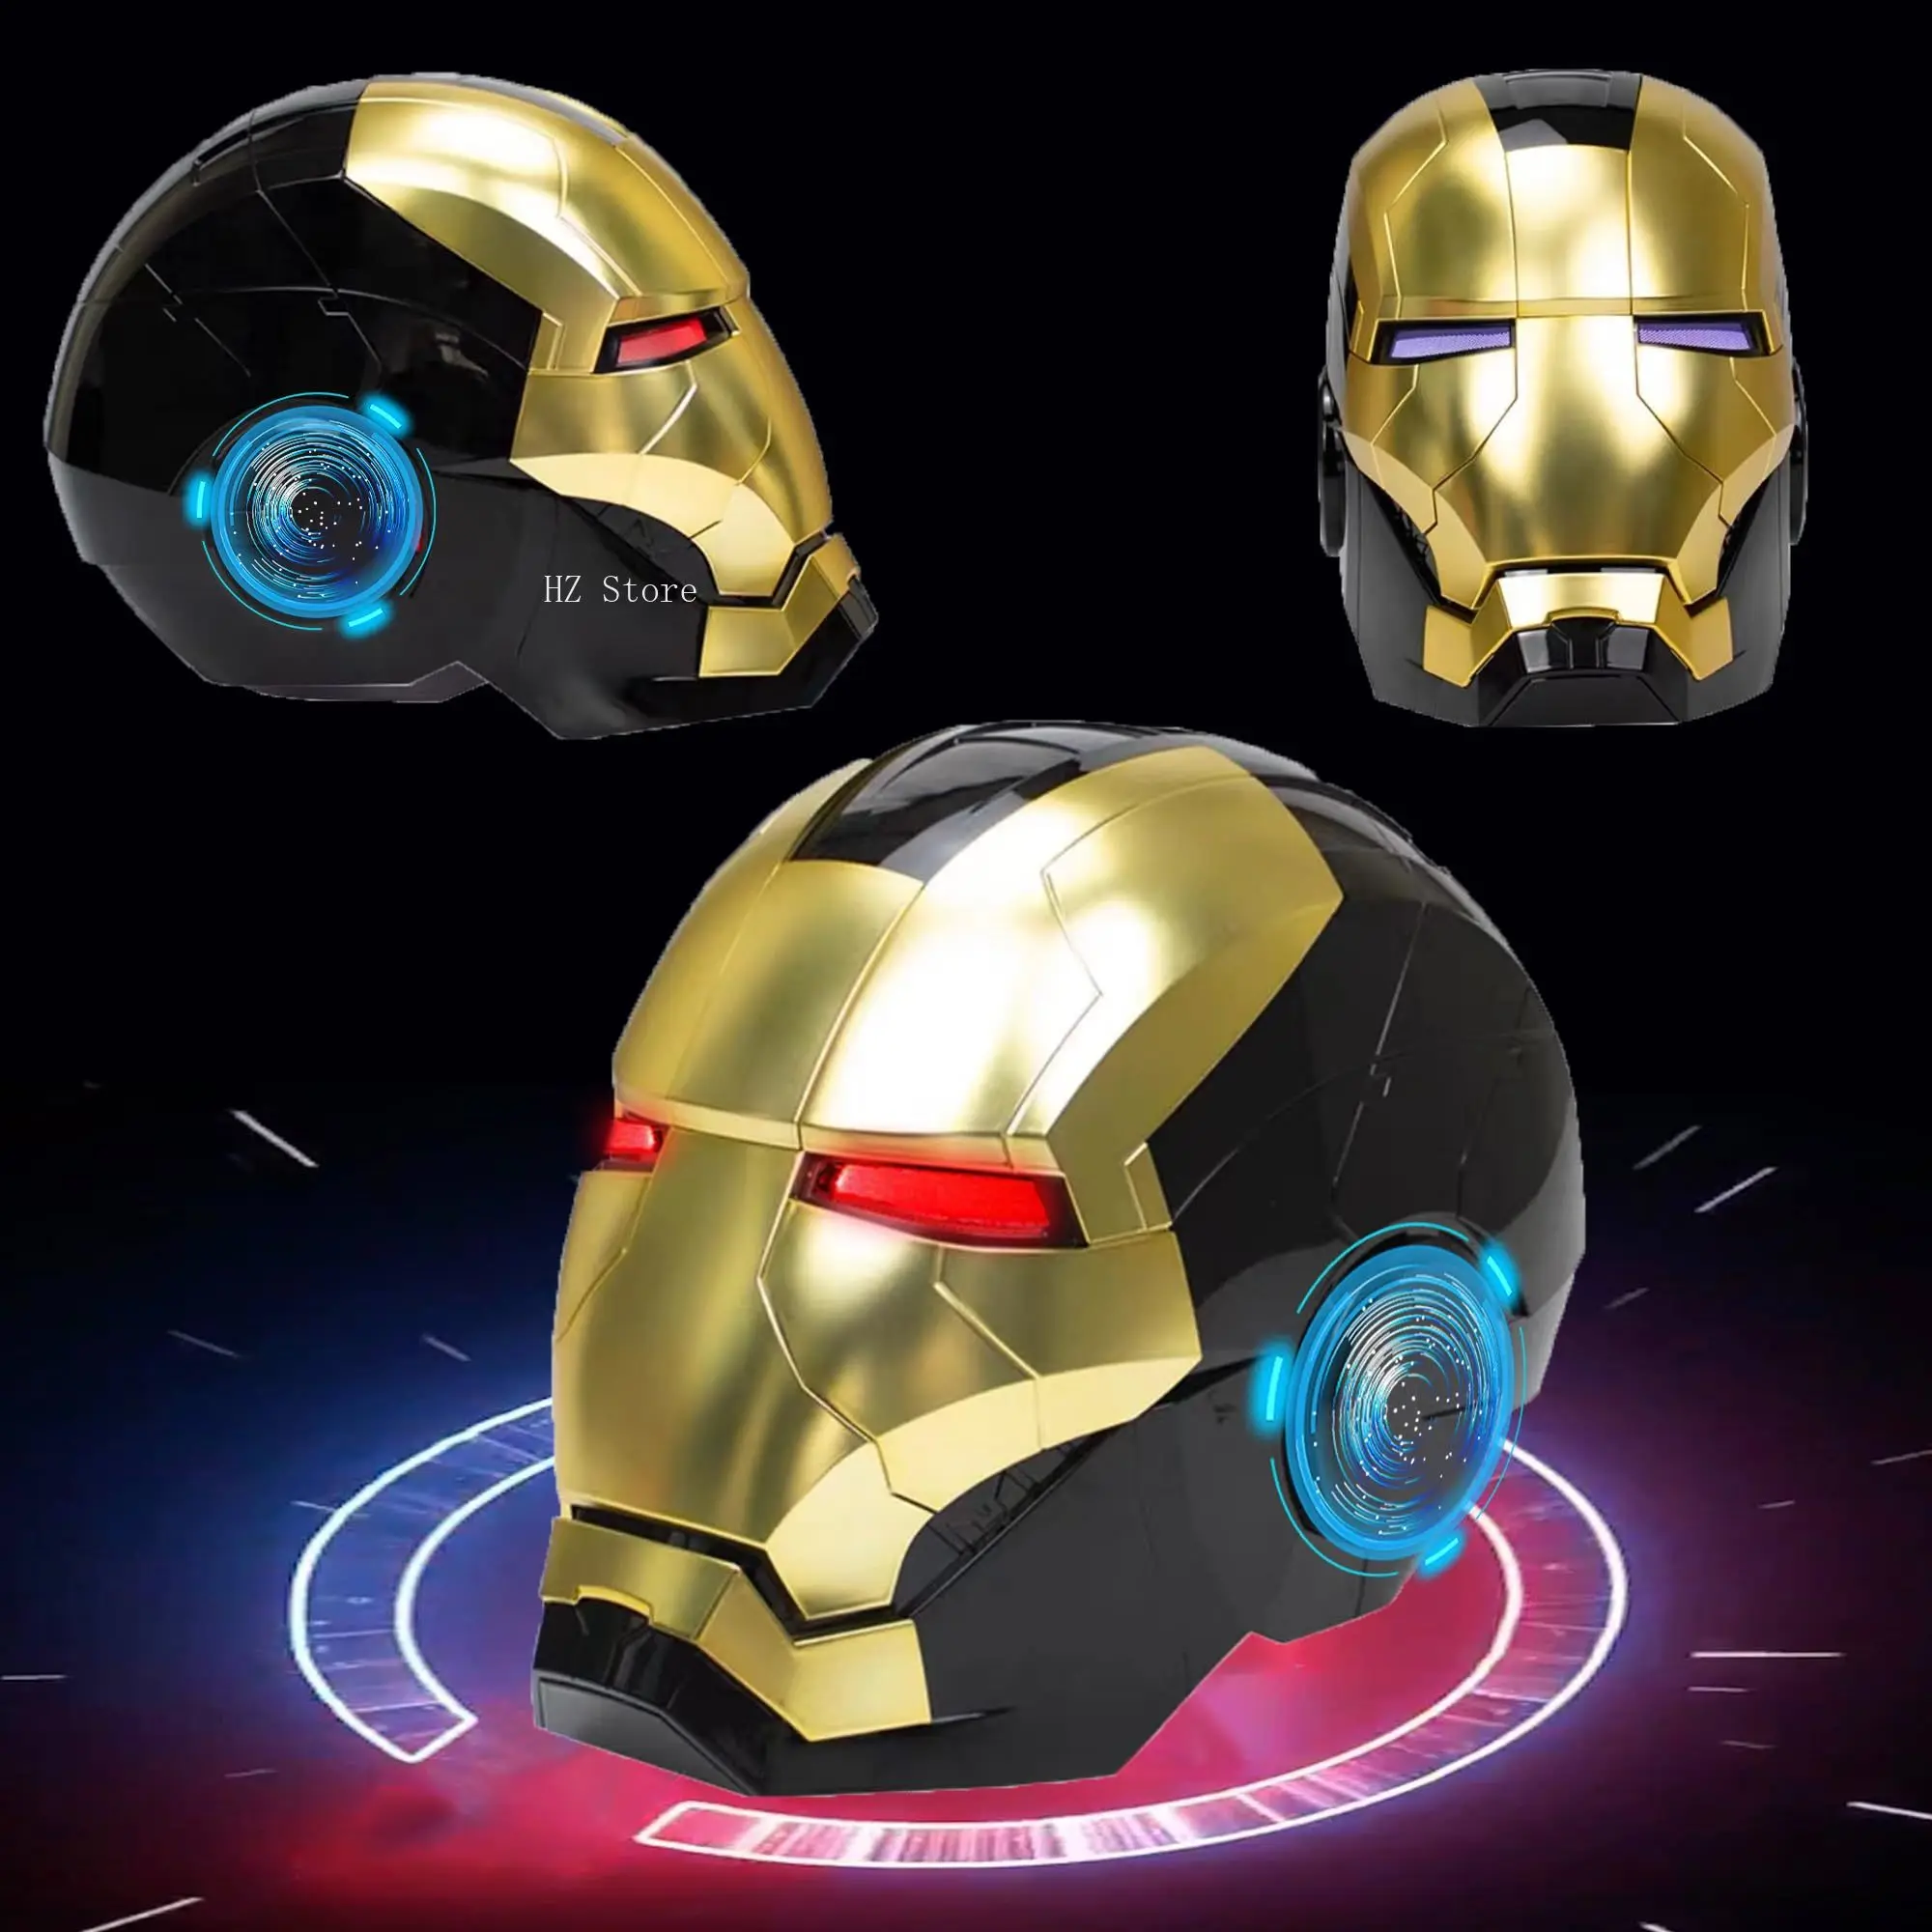 

Marvel 1:1 Electronic Iron Man Helmet Black/Gold Voice Control/Sensing Open/Close Armor Helmet With Sounds & LED Eyes